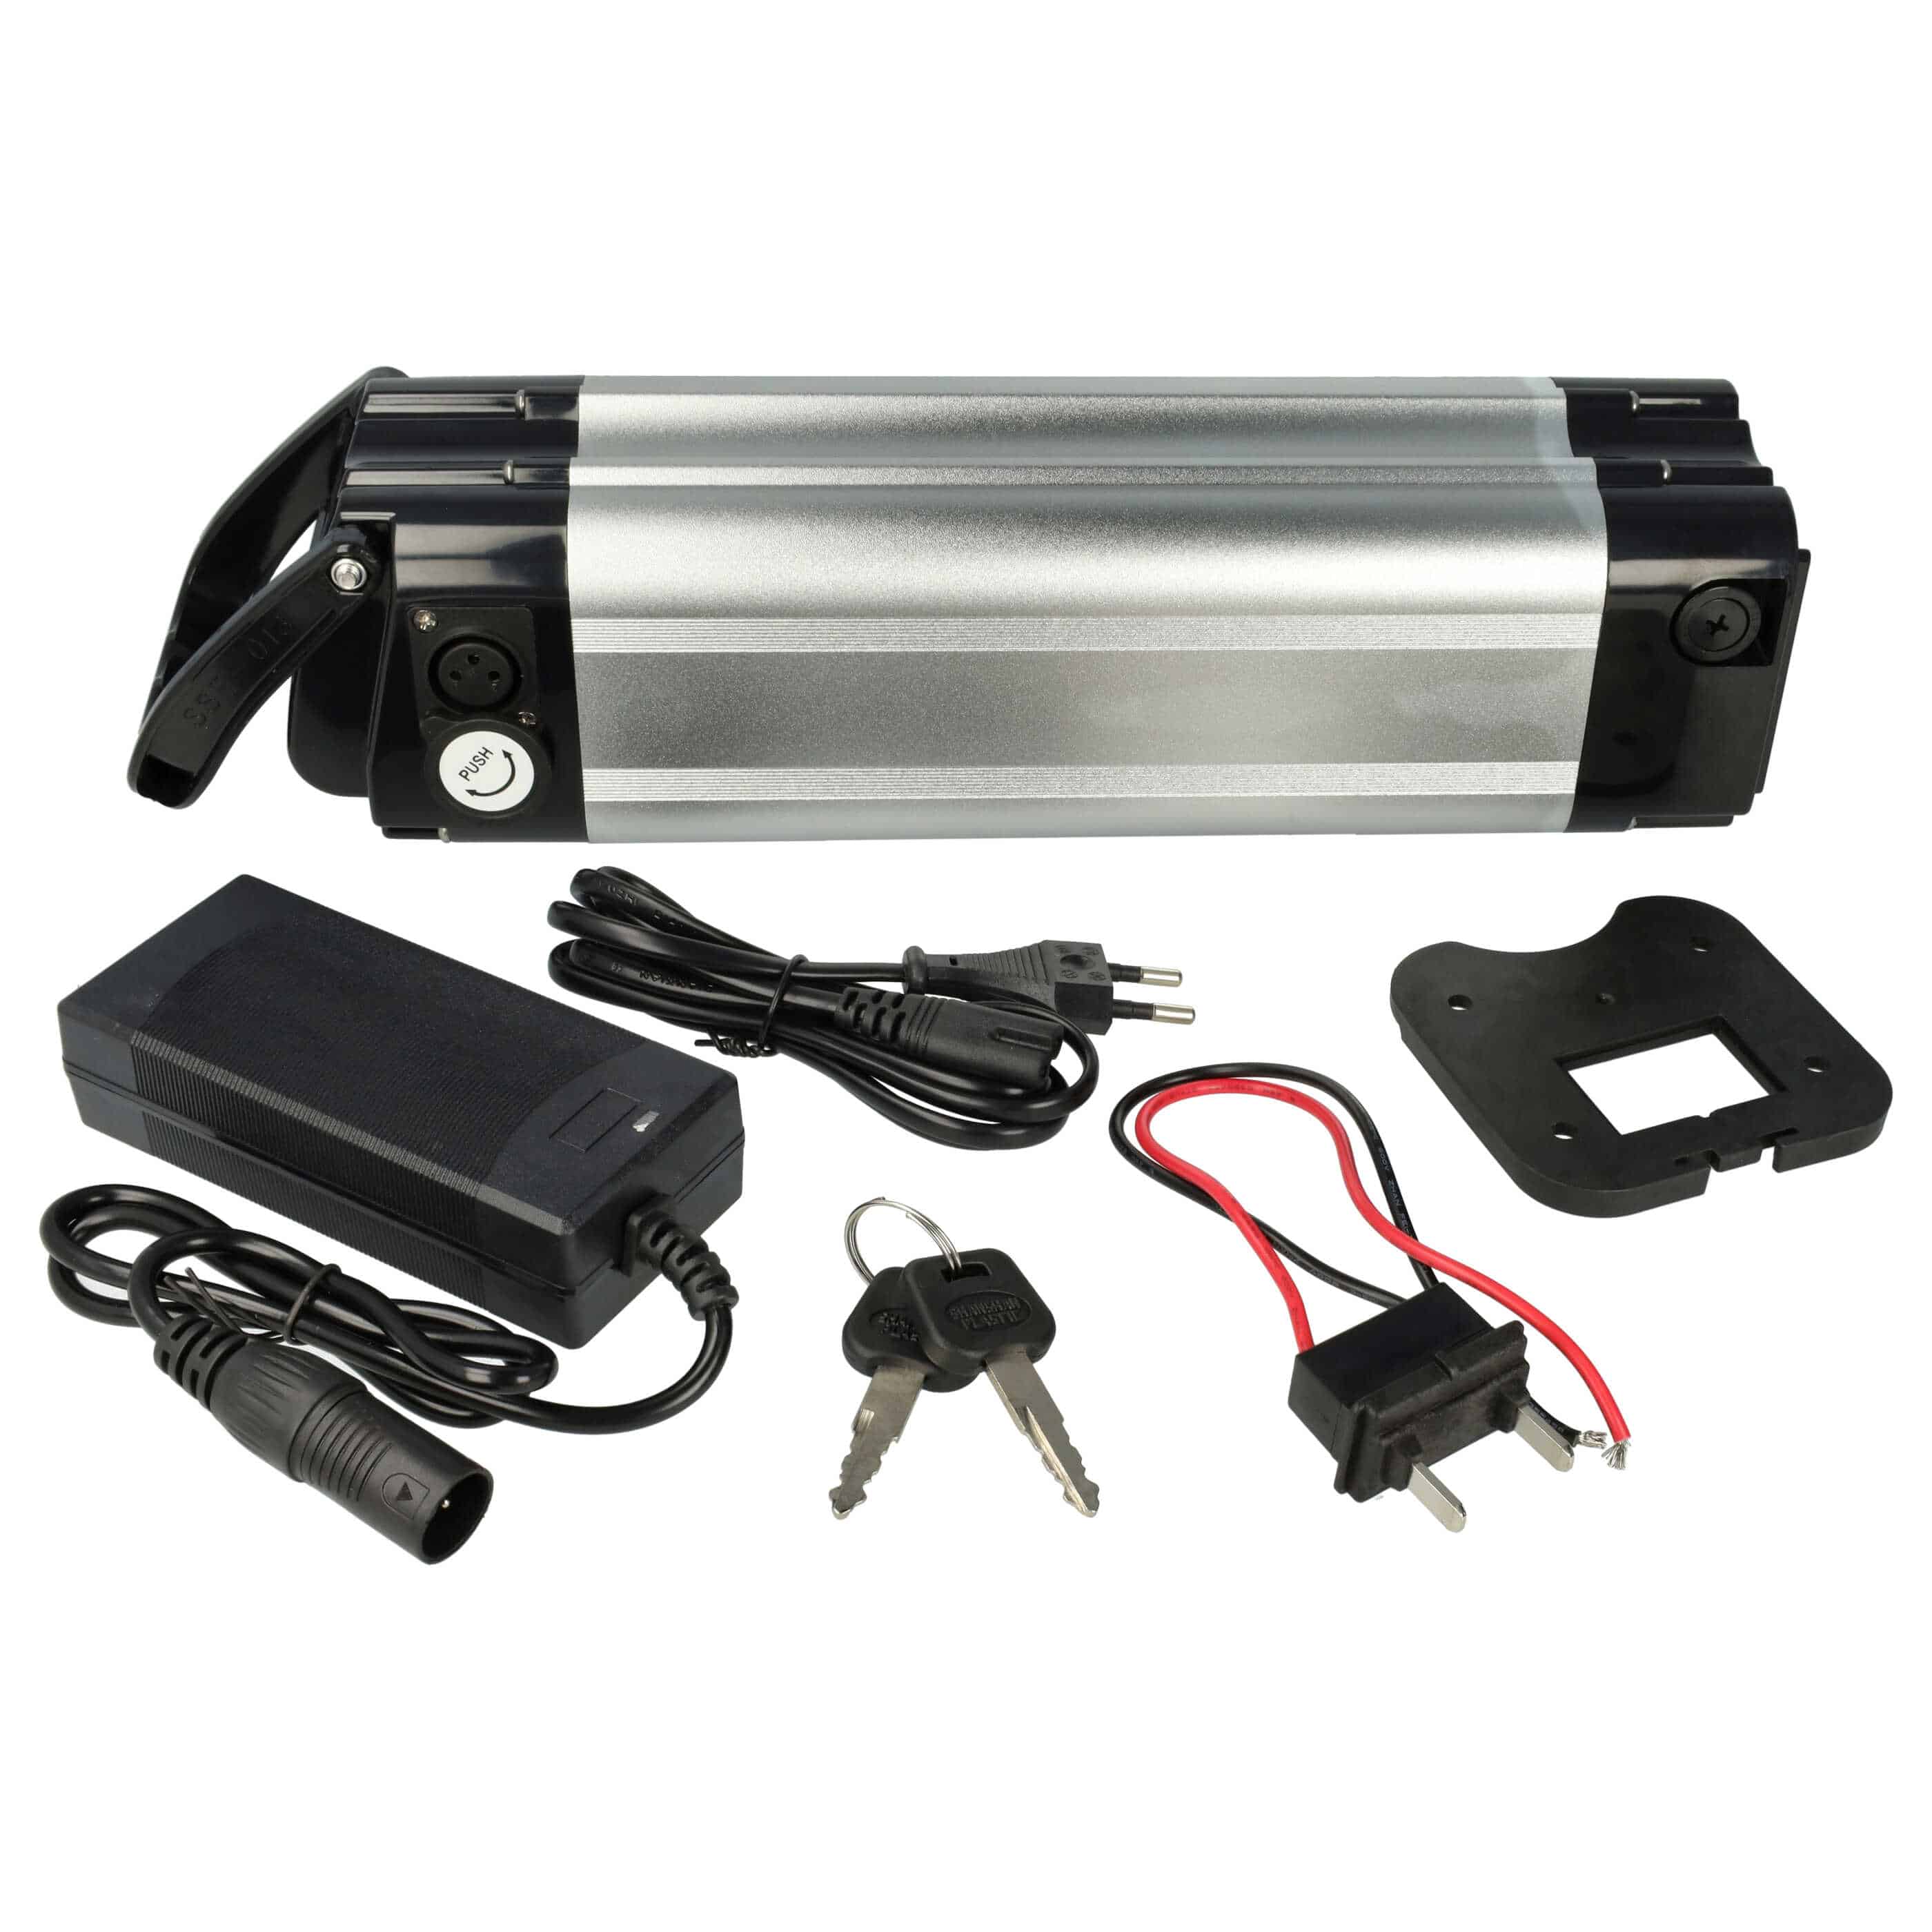 E-Bike Battery for Prophete Alu-Rex / Hagebaumarkt / Hofer / Praktiker / Aldi - 10000mAh 24V Li-Ion, black / s